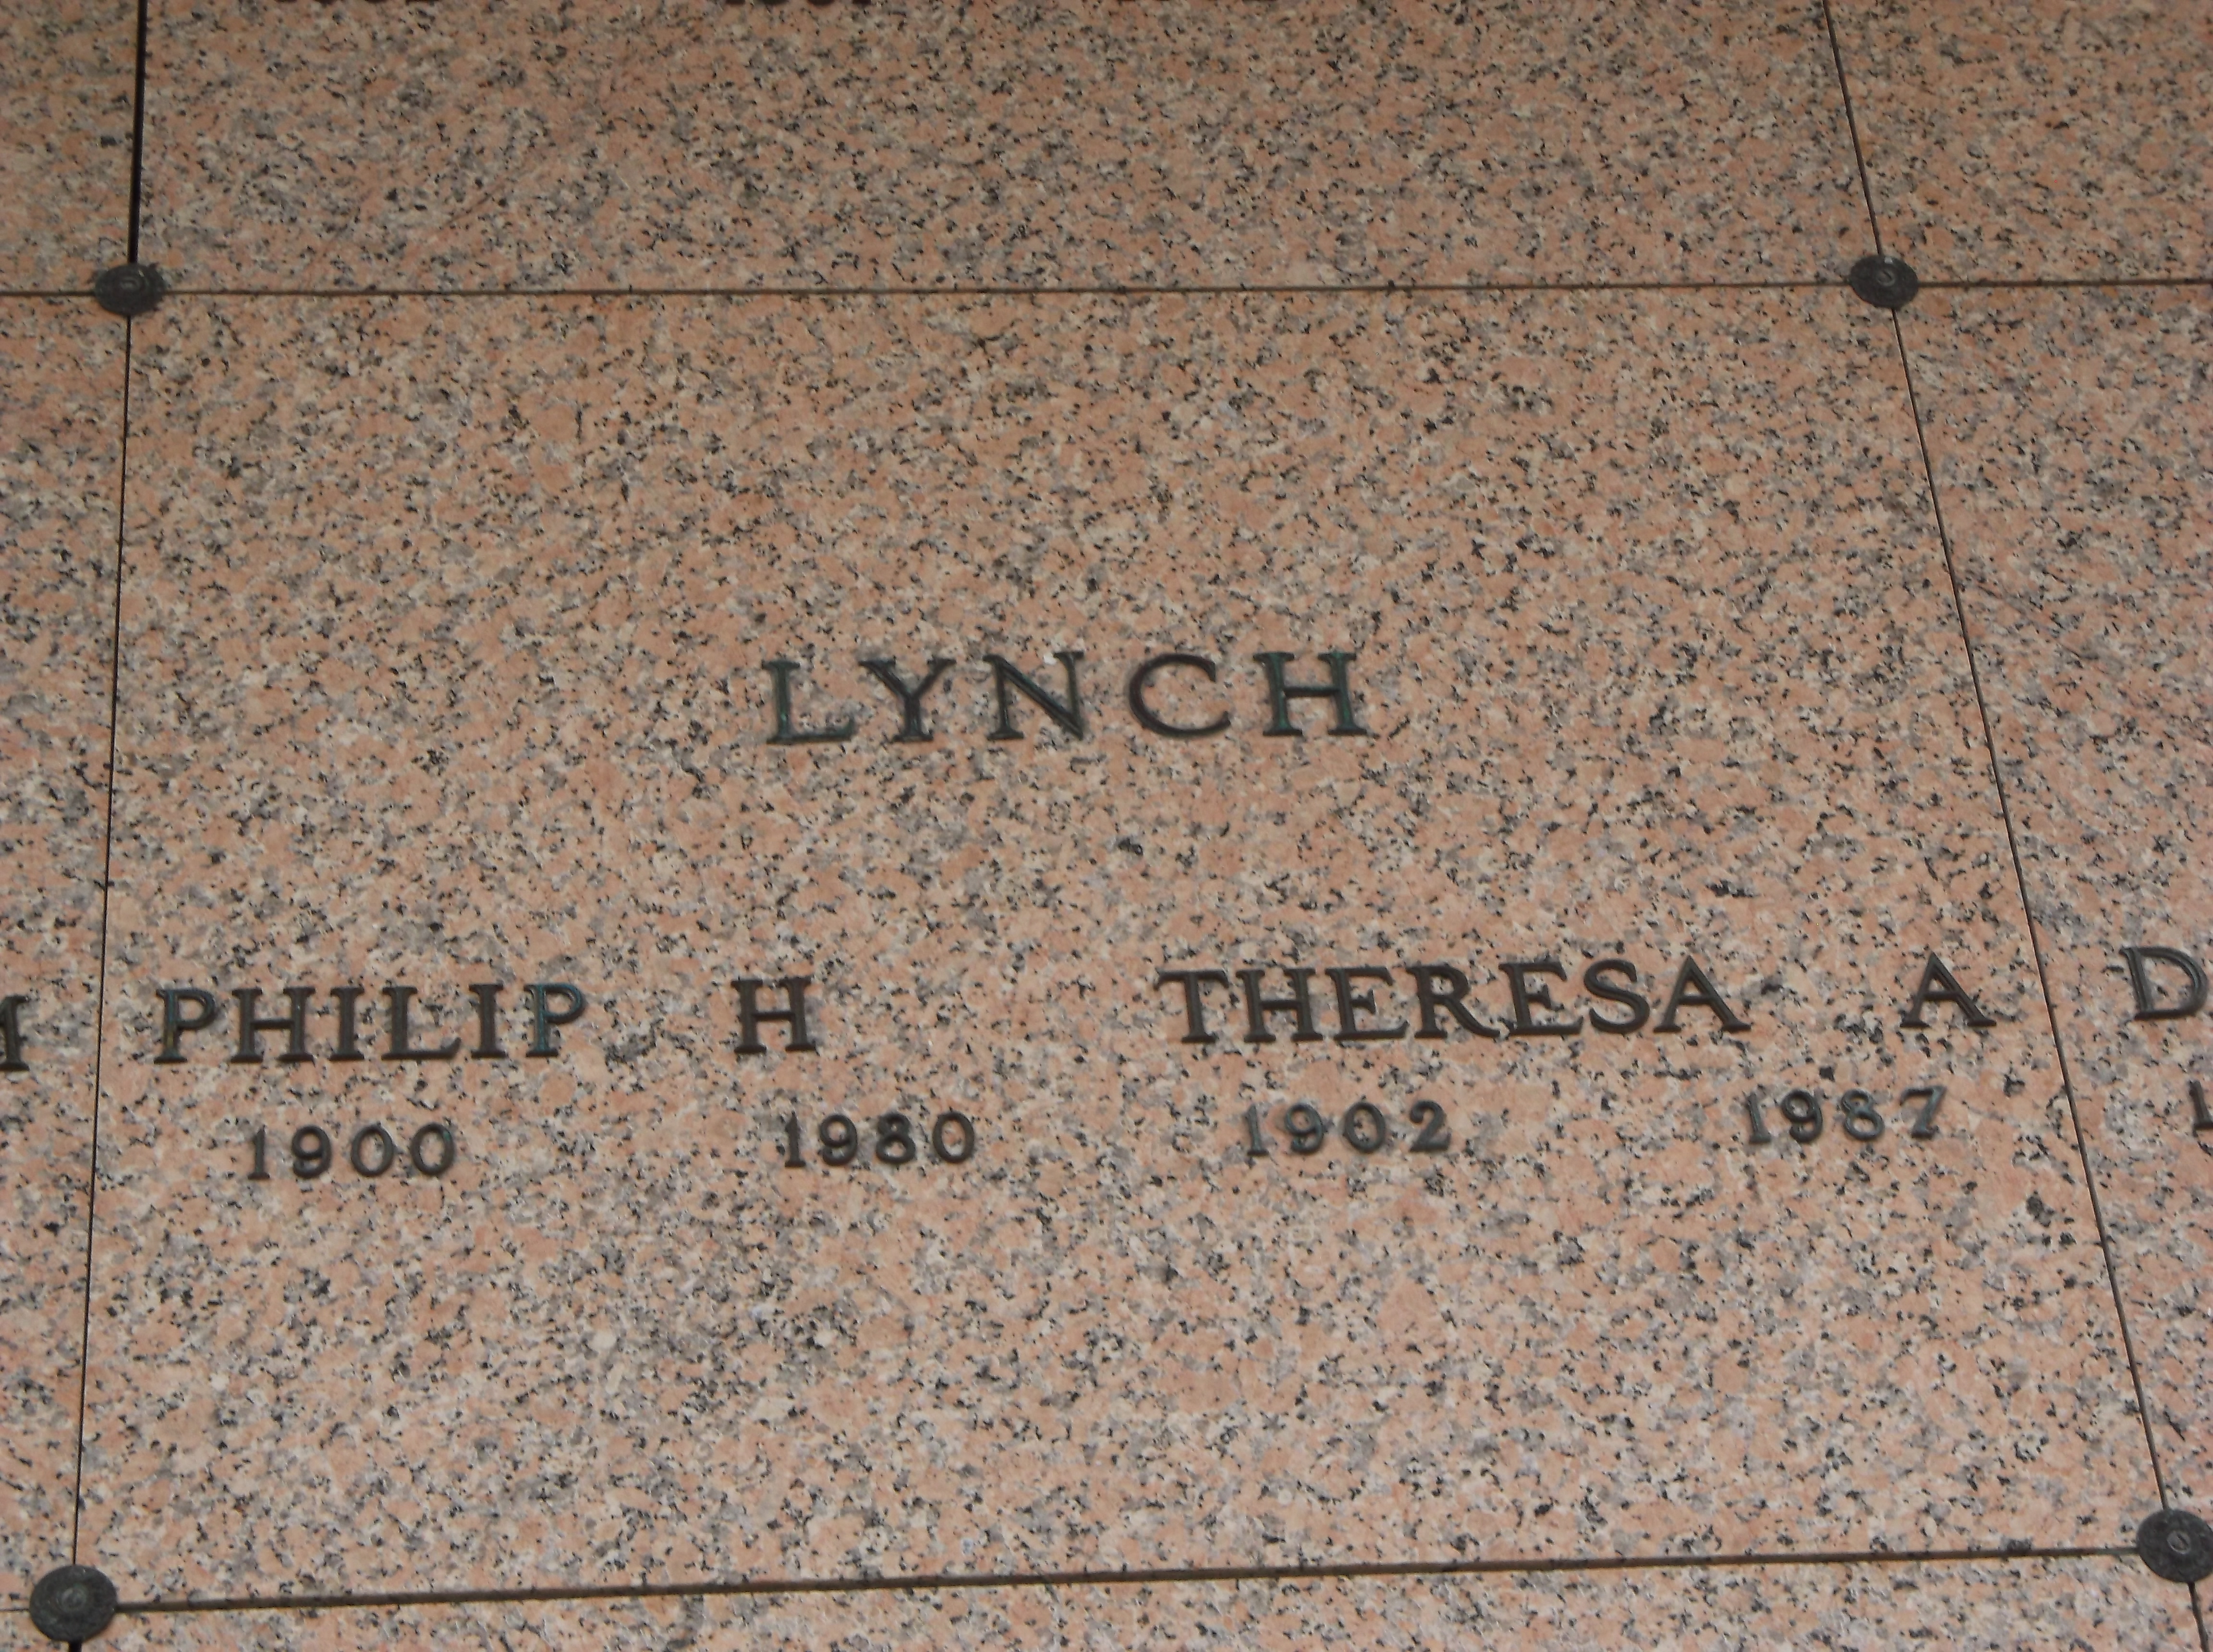 Philip H Lynch